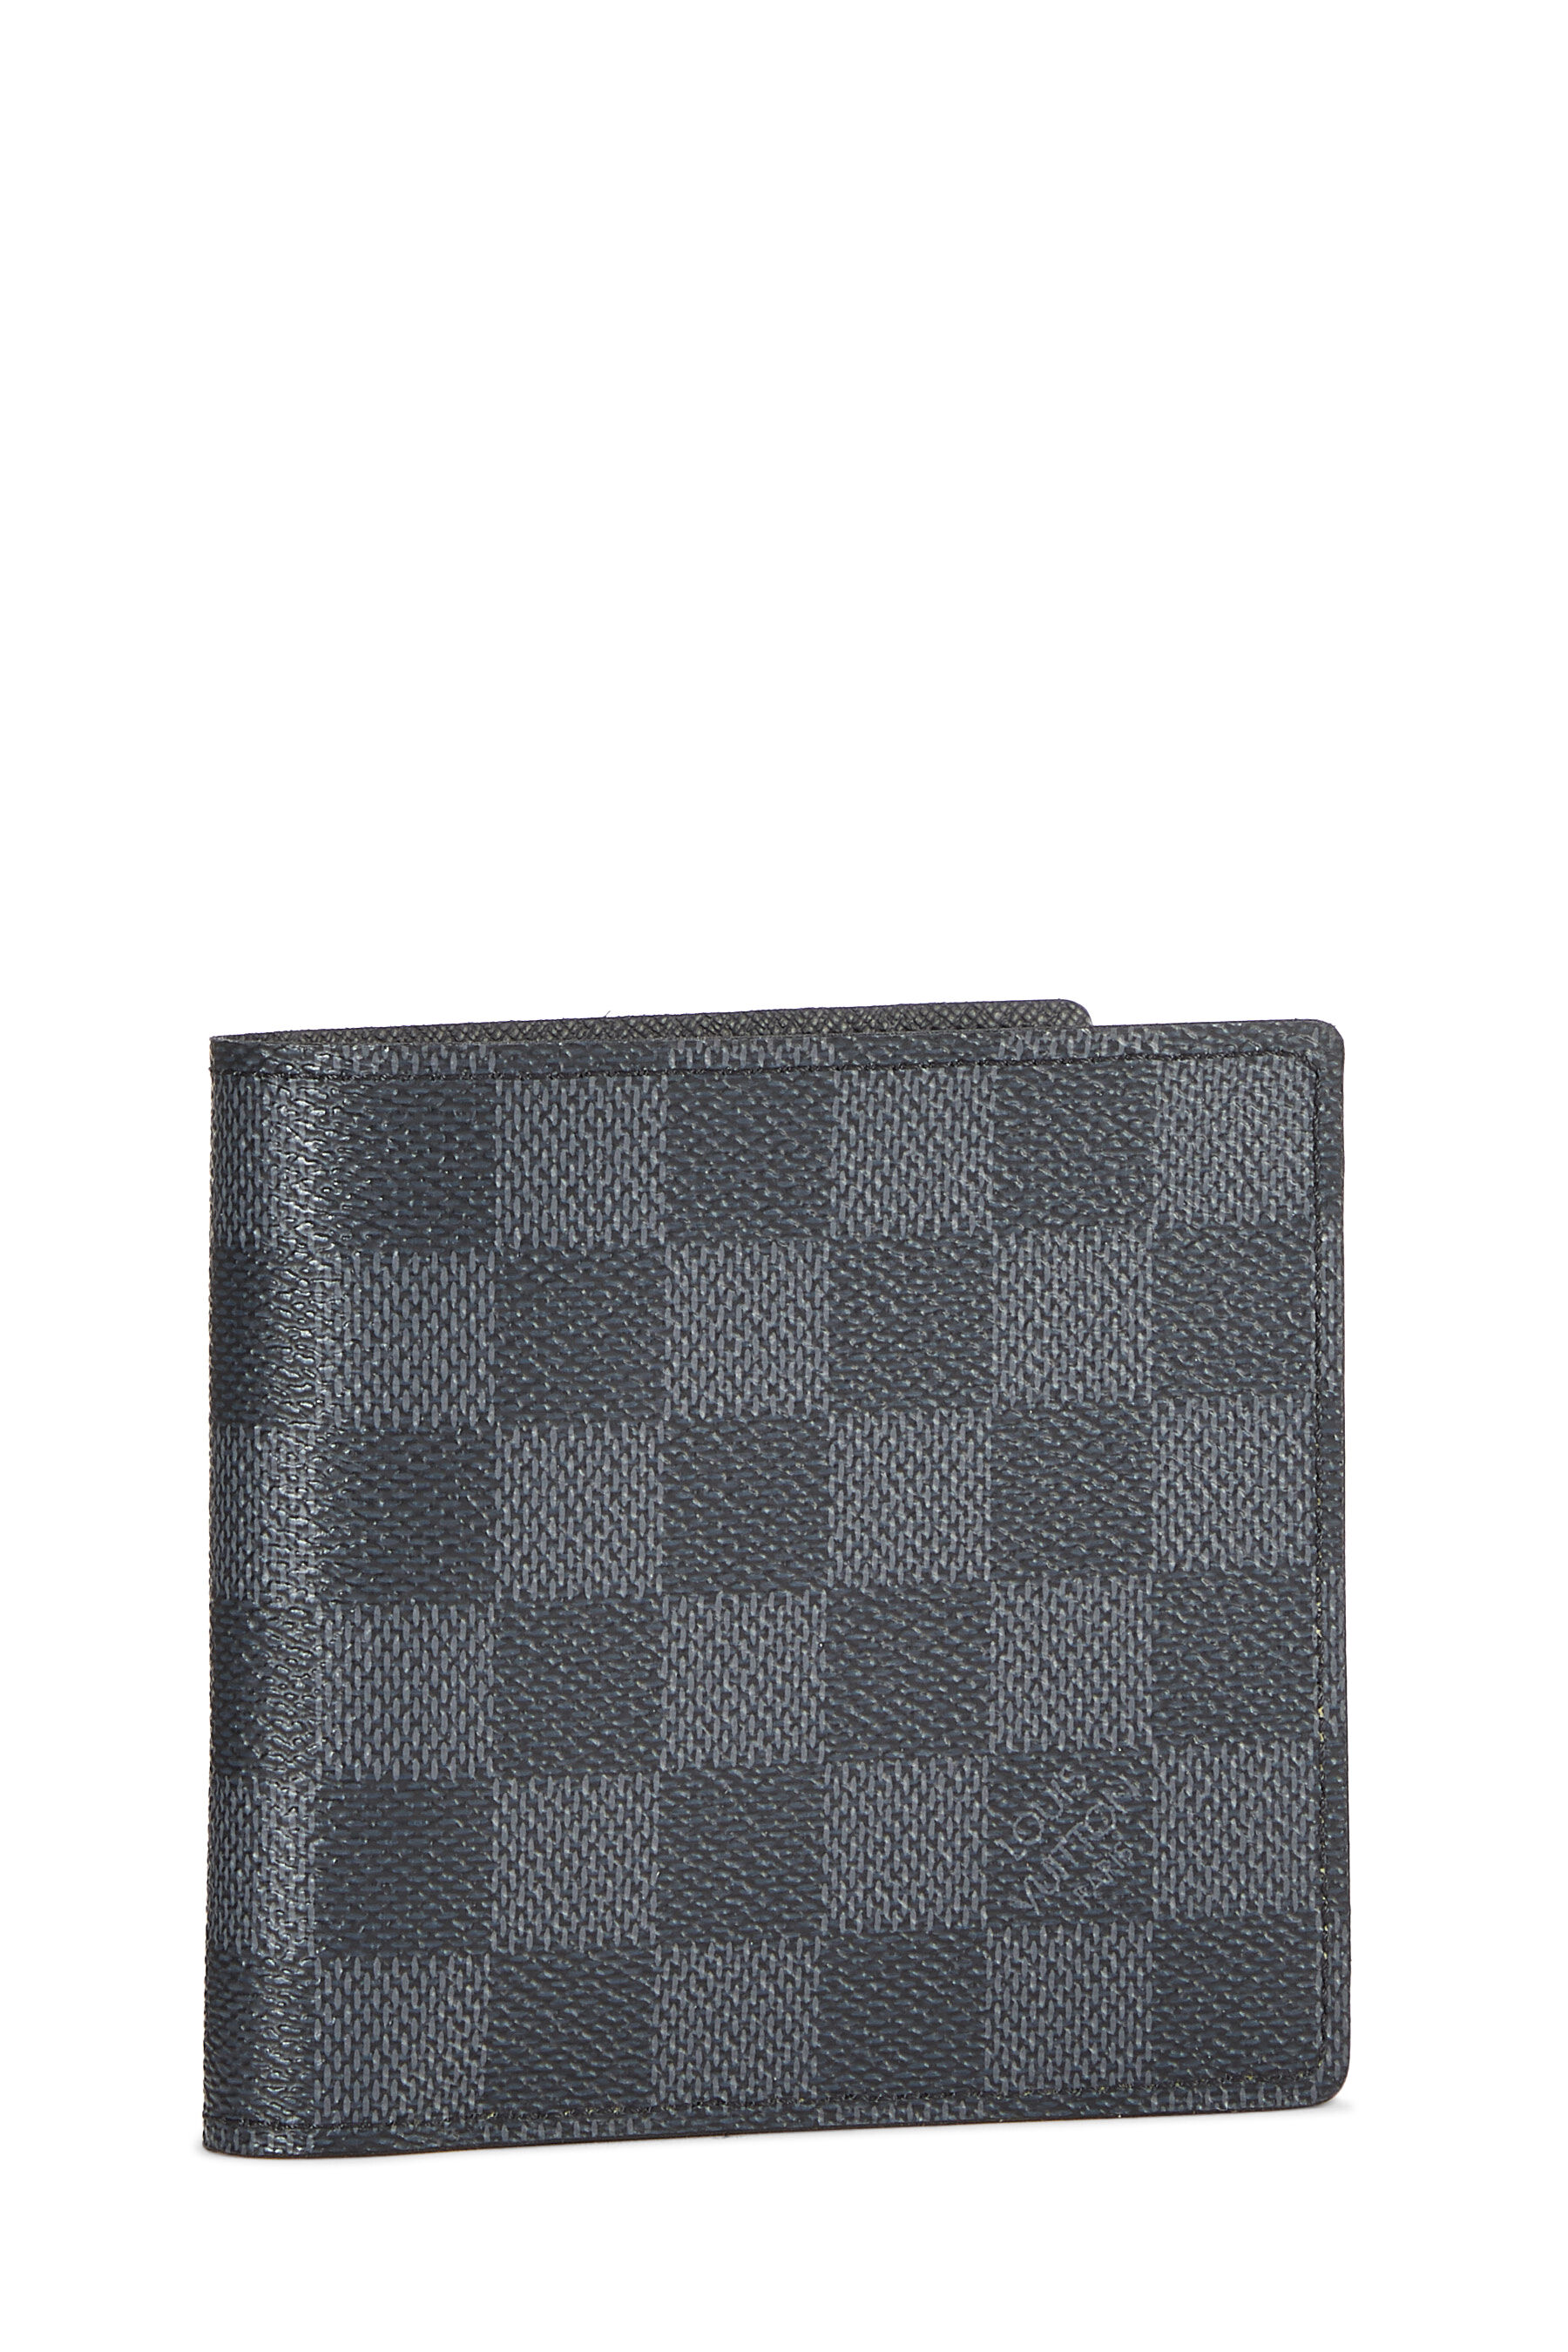 Shop Louis Vuitton MARCO Marco Wallet (N63336, M62288, M62545) by